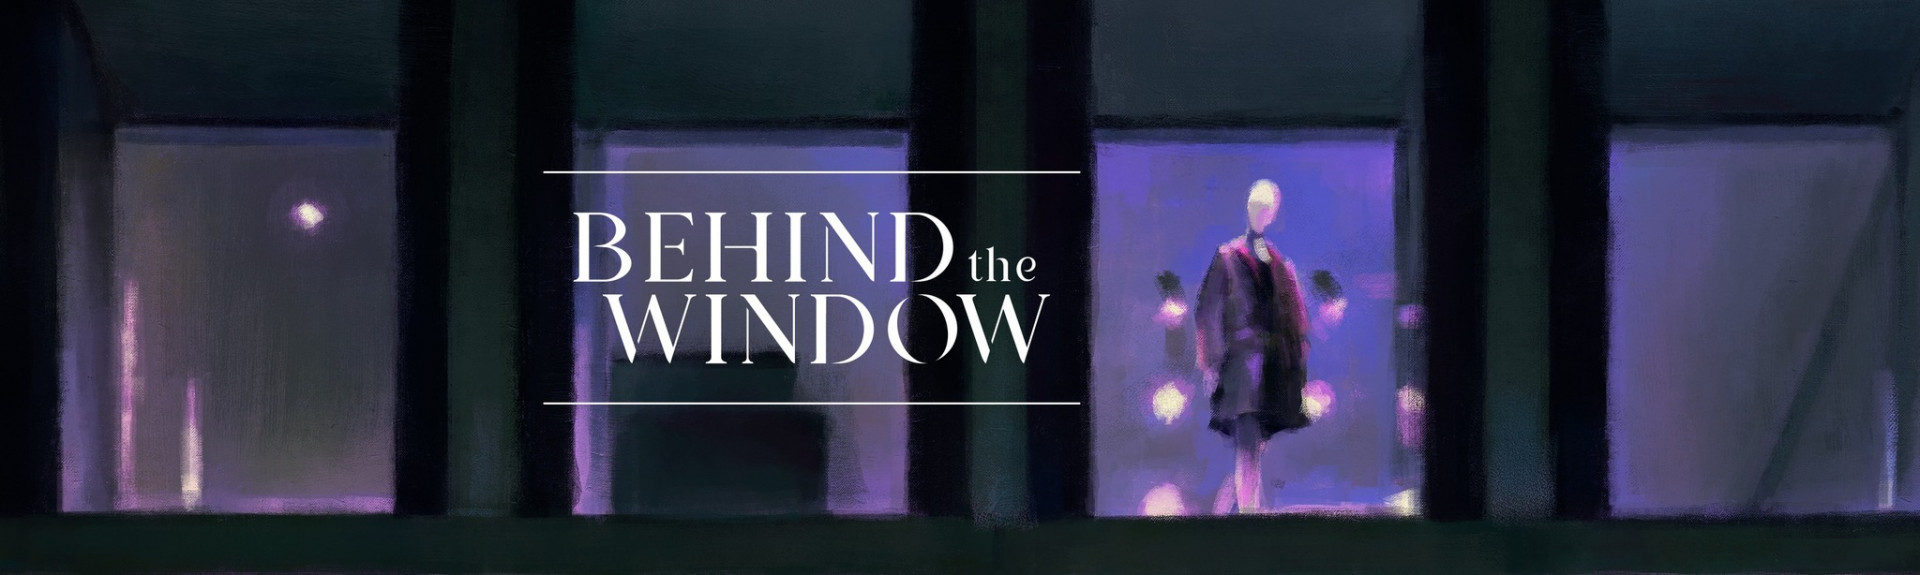 BEHIND THE WINDOW